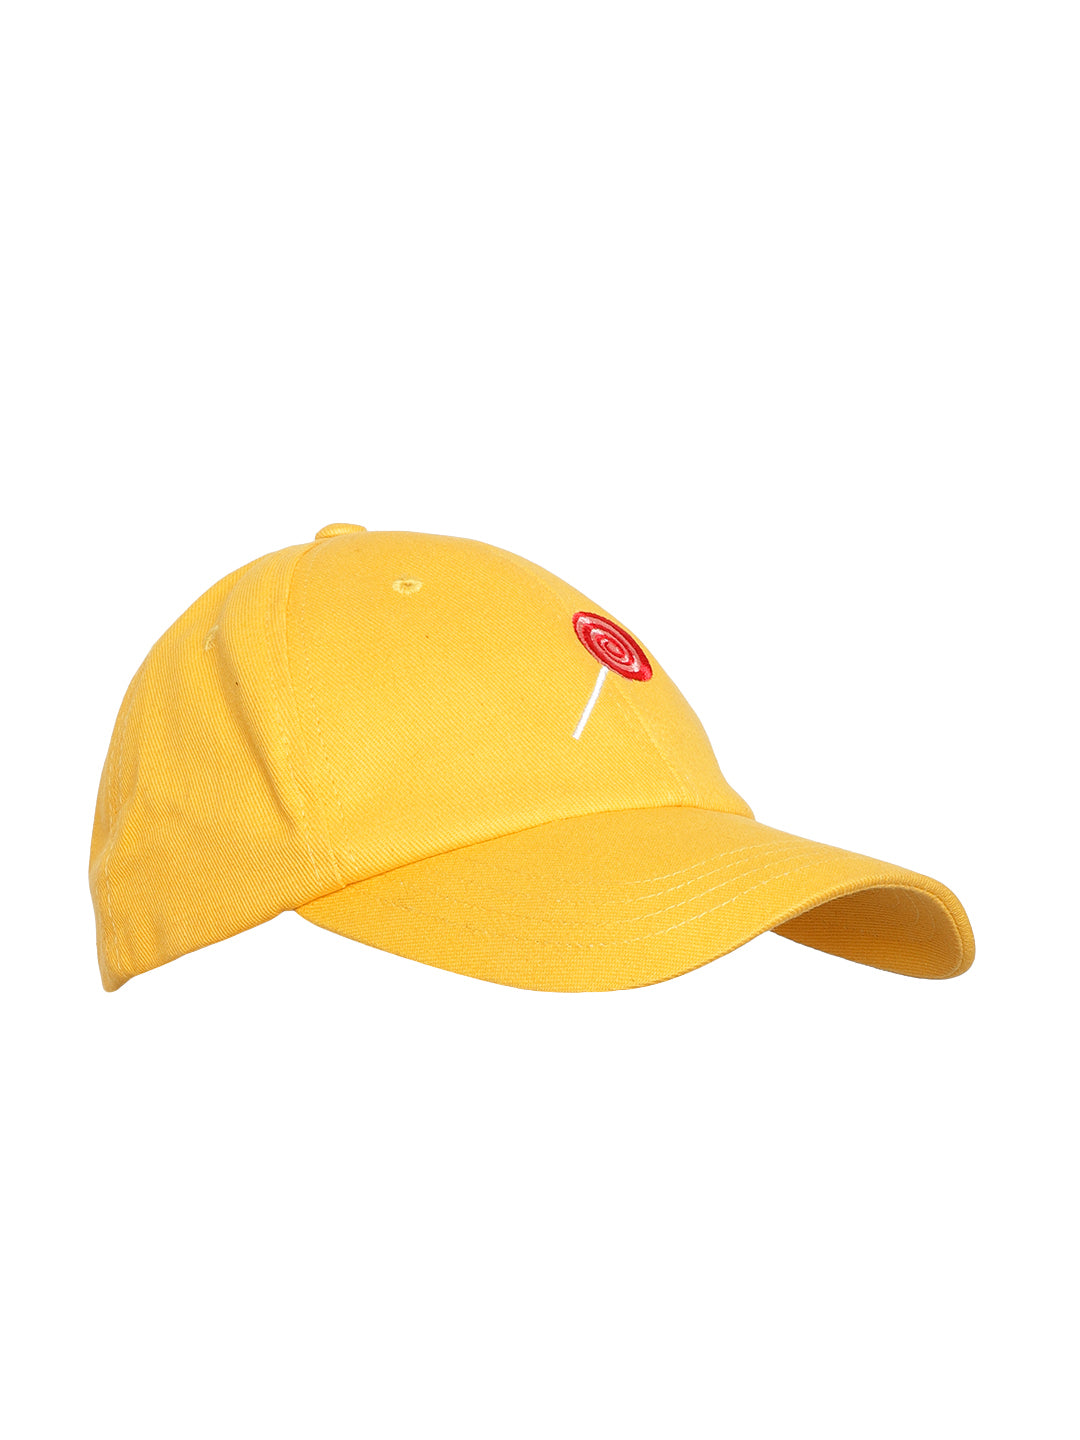 Blueberry Yellow lollipop embroidered baseball cap